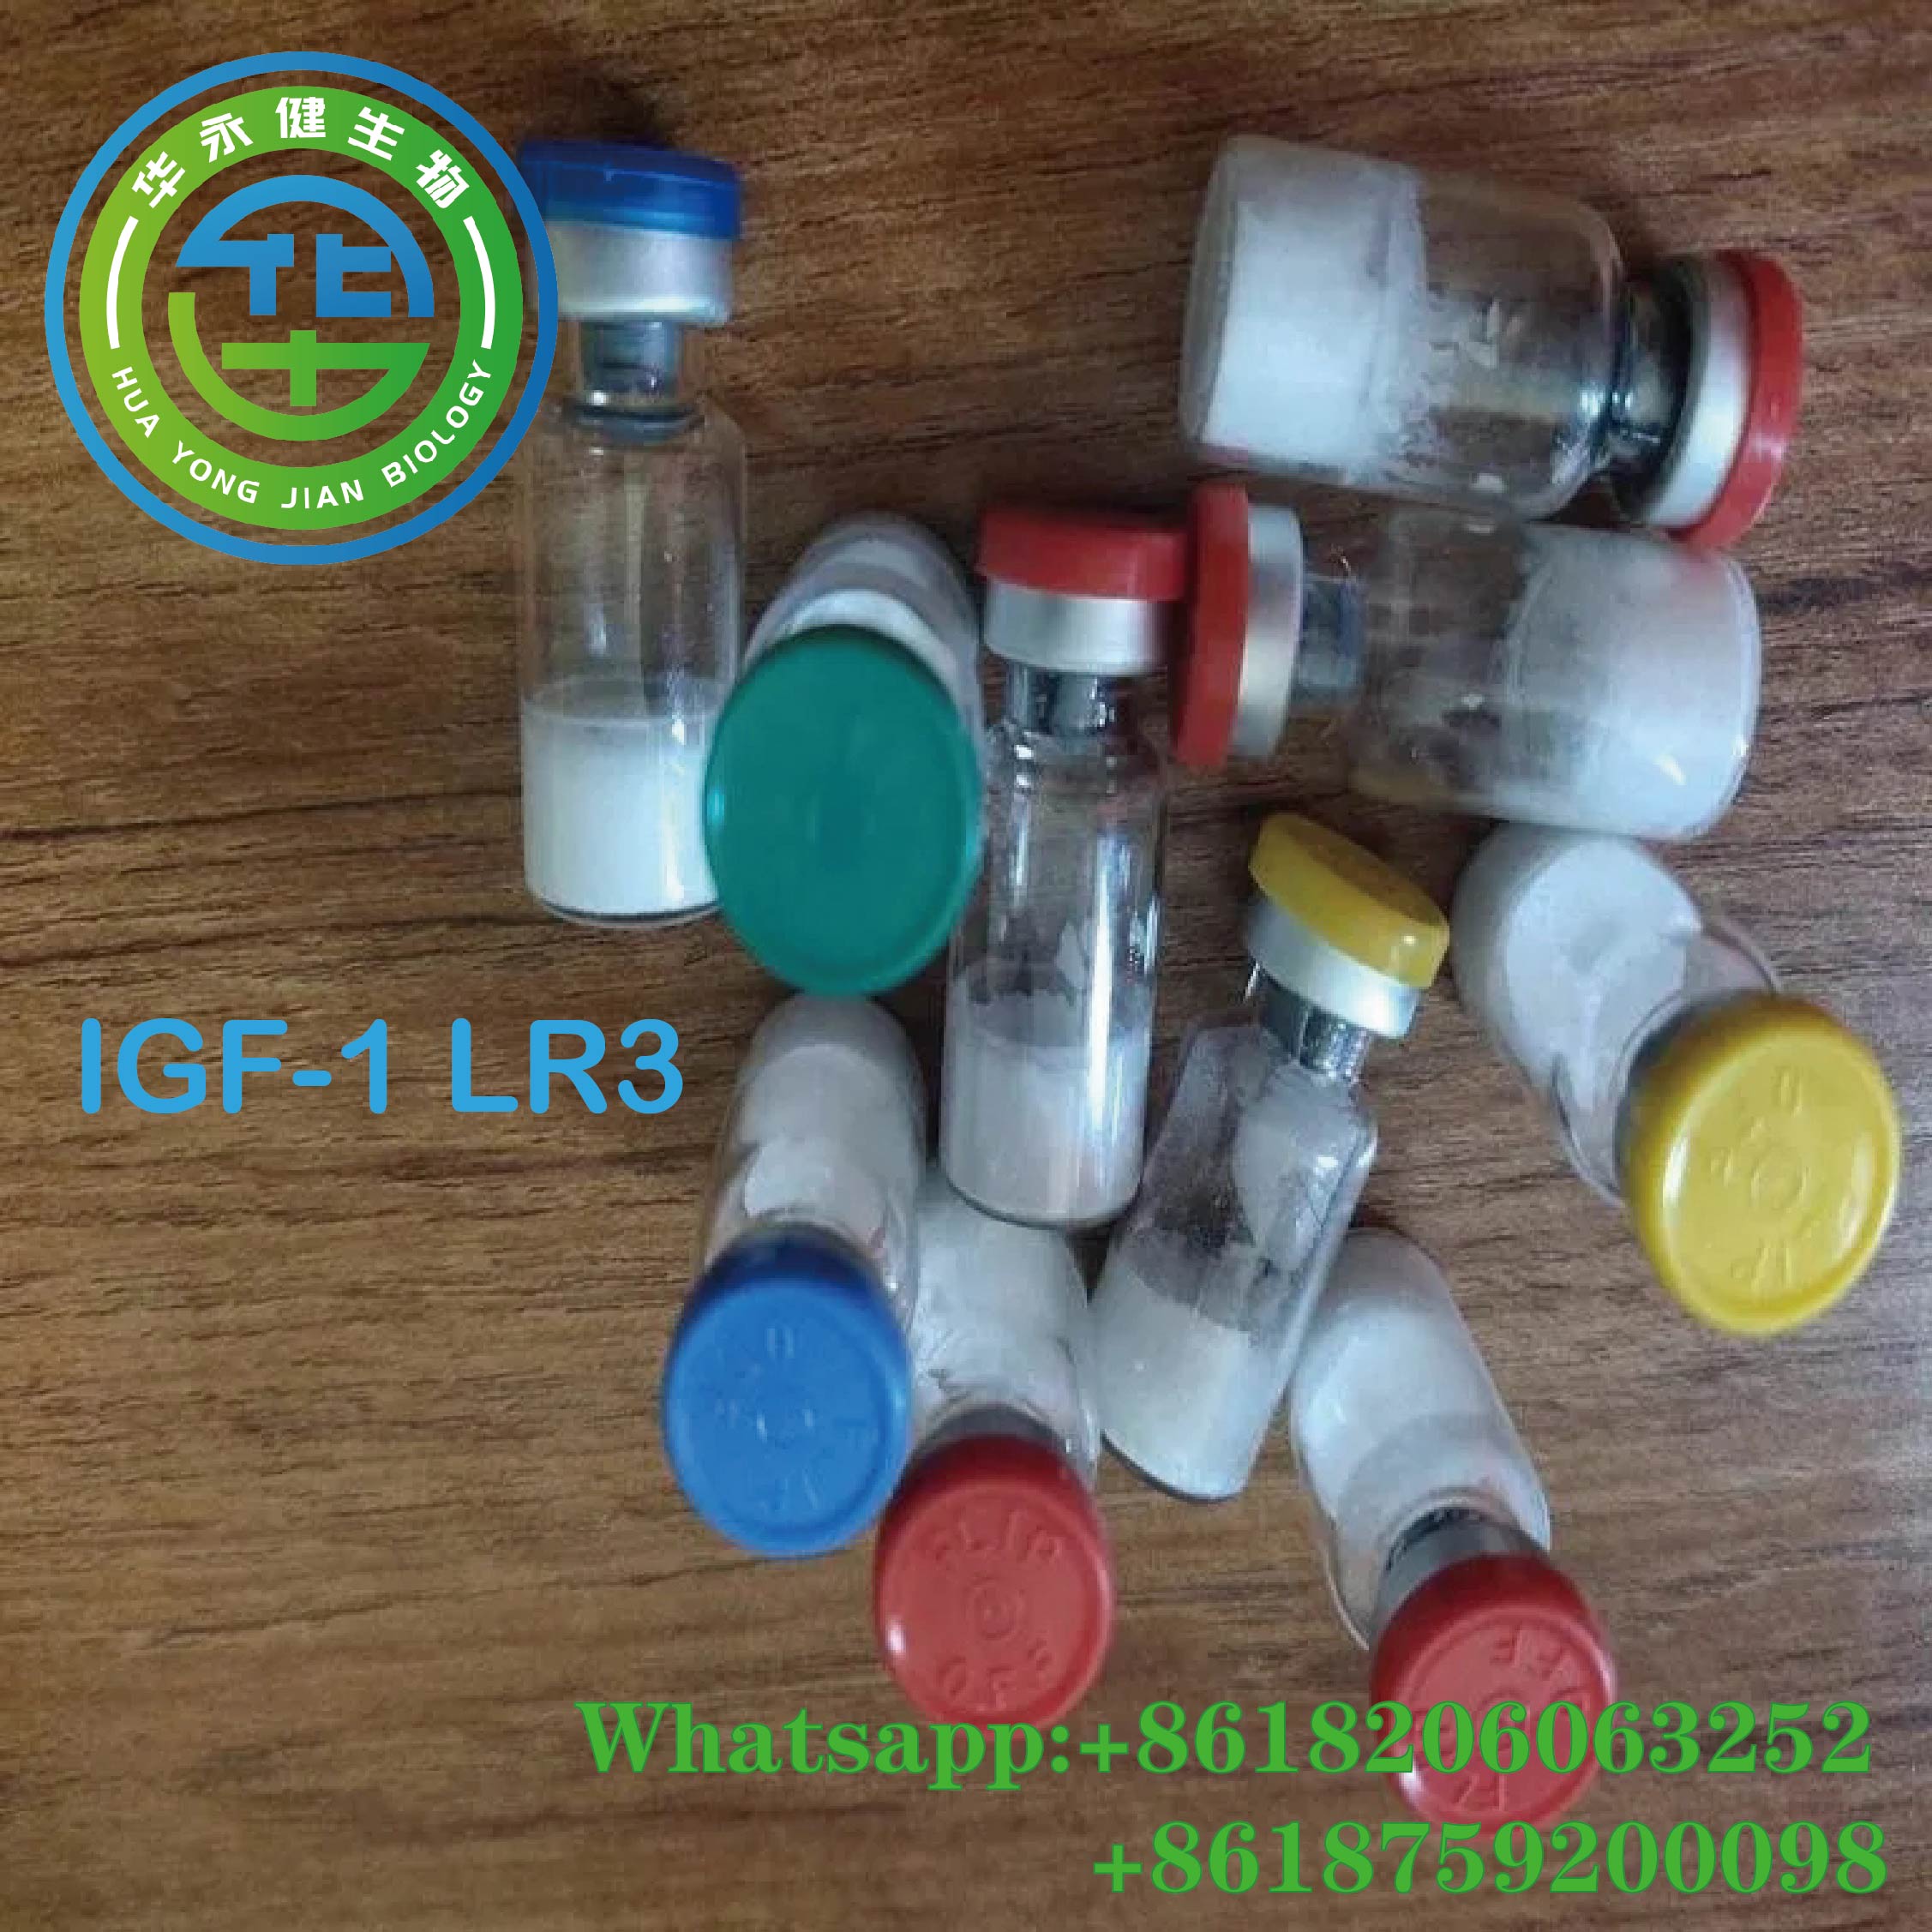 Pharmaceuticals Epital′on Peptides IGF-1 LR3 for Anti Aging/Anti Wrinkle CasNO.946870-92-4